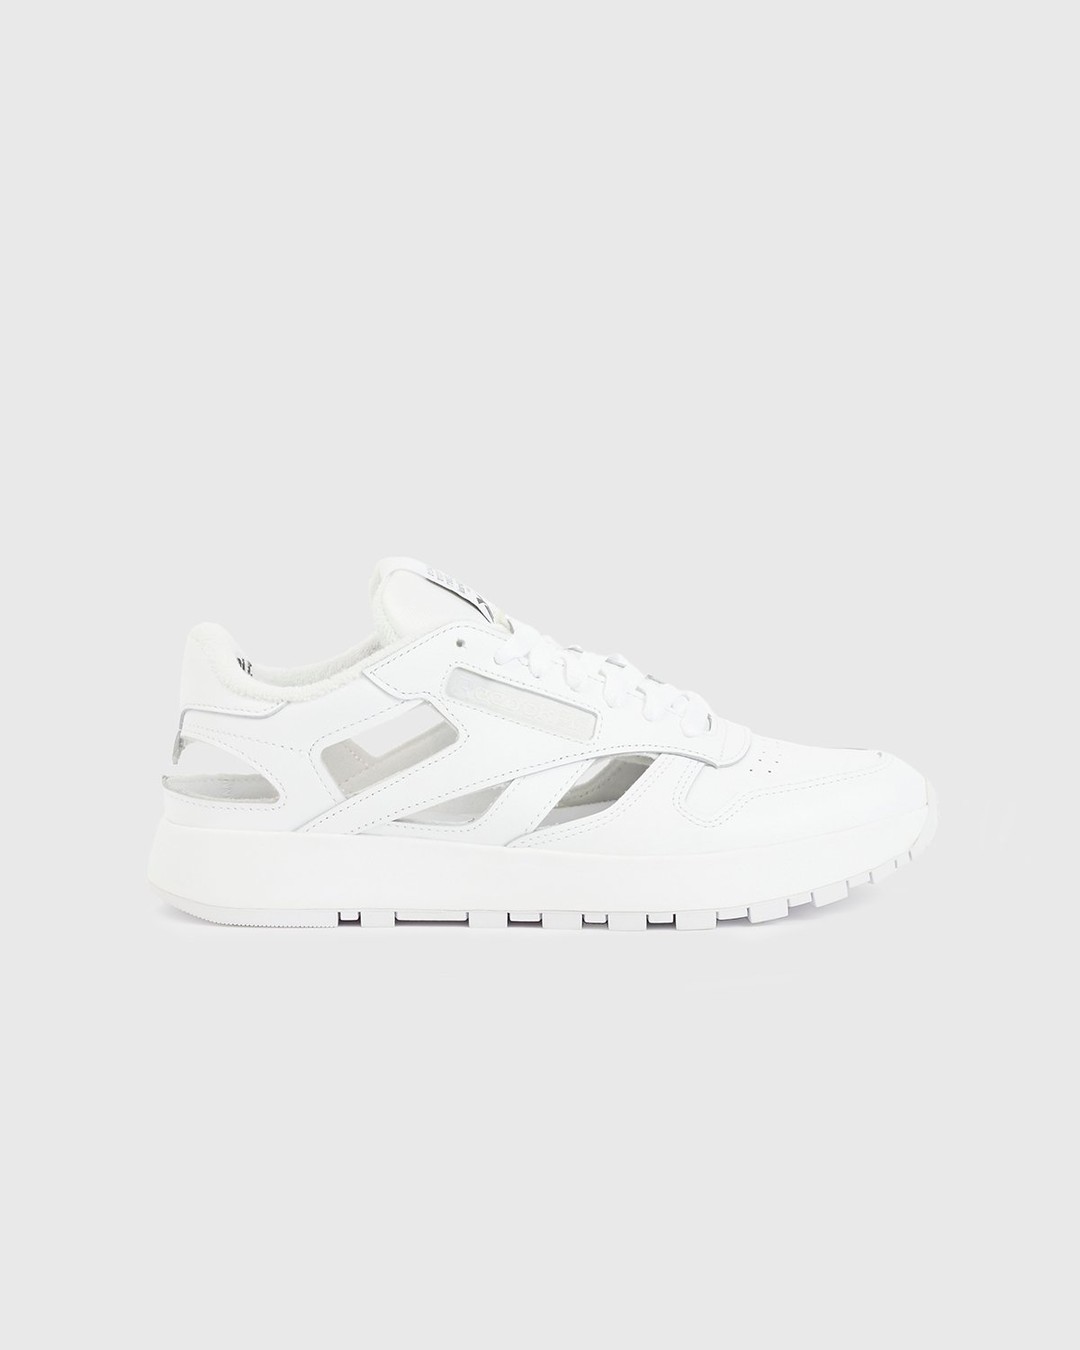 Maison Margiela x Reebok – Classic Leather Tabi Low White - Sneakers - White - Image 1